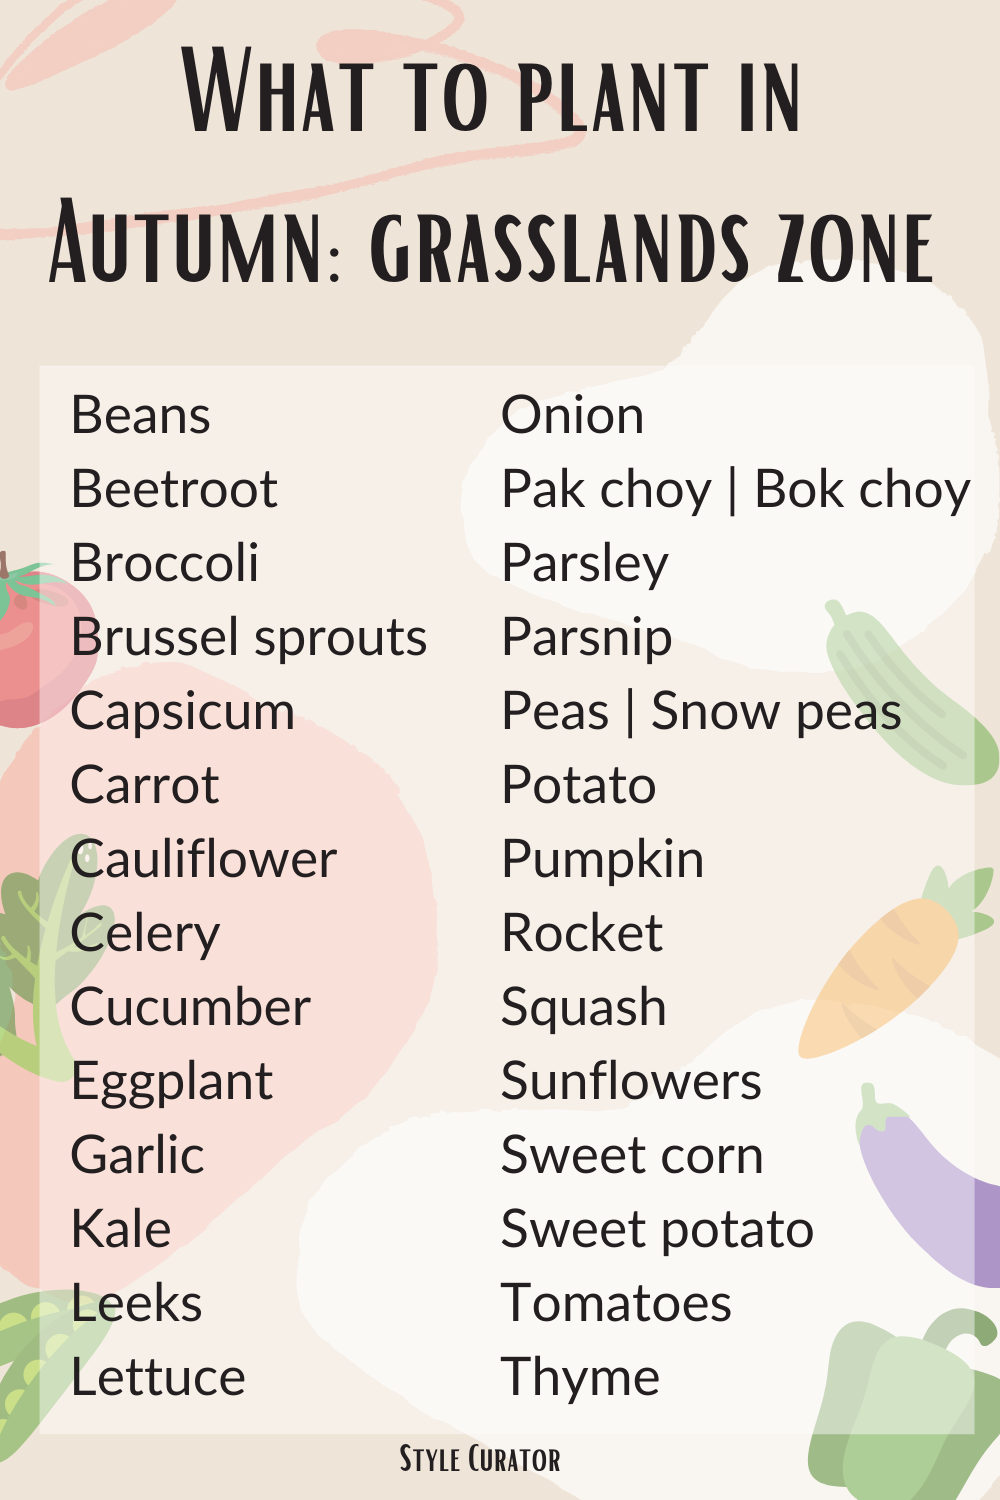 What to plant in Autumn in Australia - grasslands zone